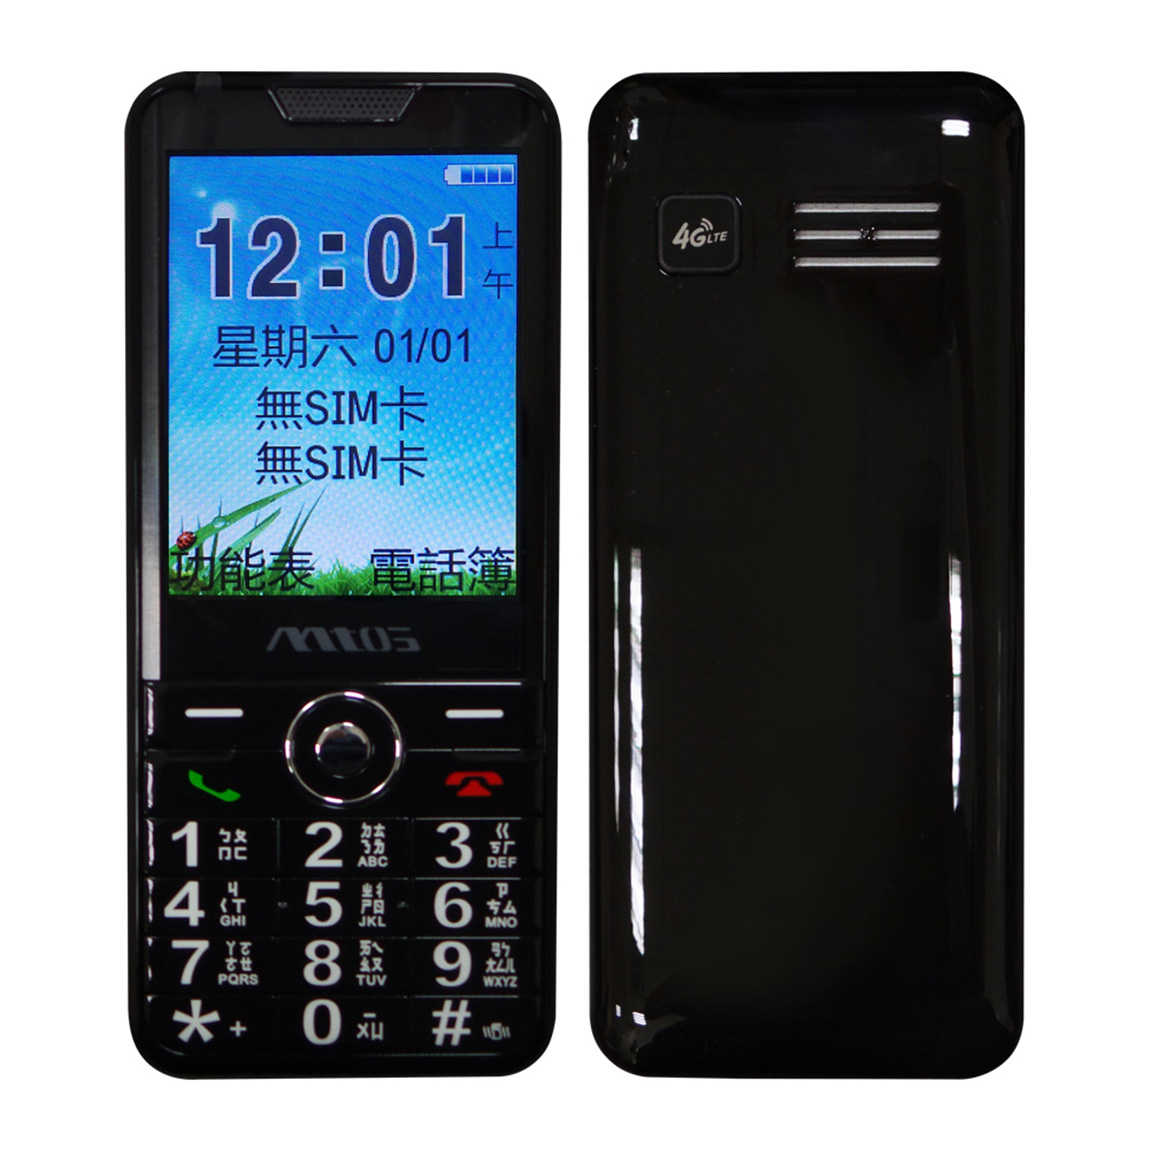 mtos C13 4G 2.8吋雙卡雙待資安直立手機(TypeC充電+超亮手電筒)